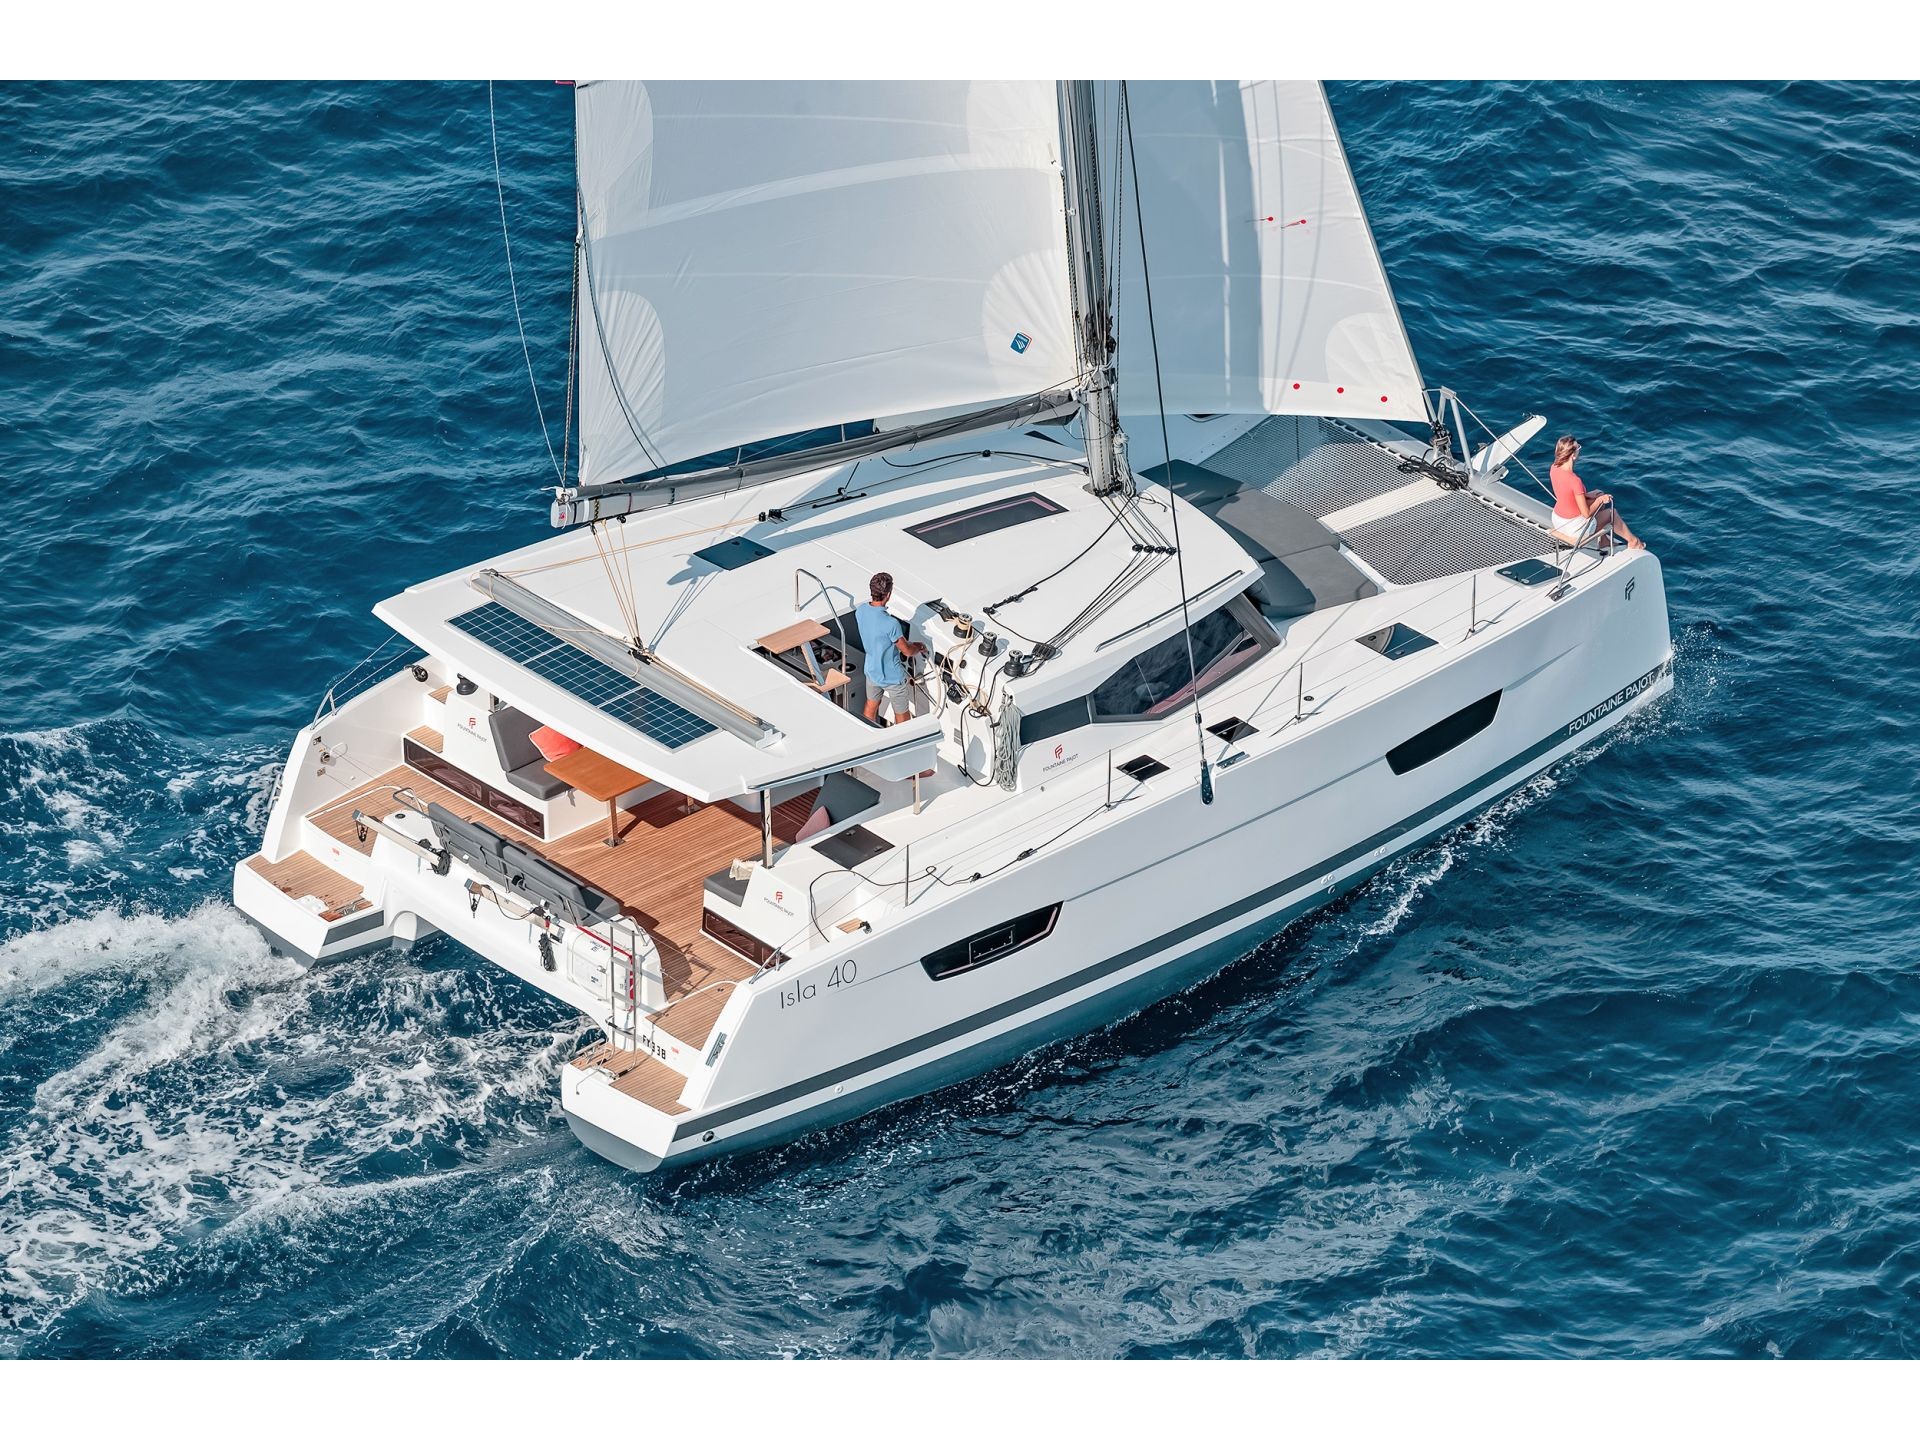 Yacht charter Isla 40 - Croatia, Central Dalmatia, Skradin